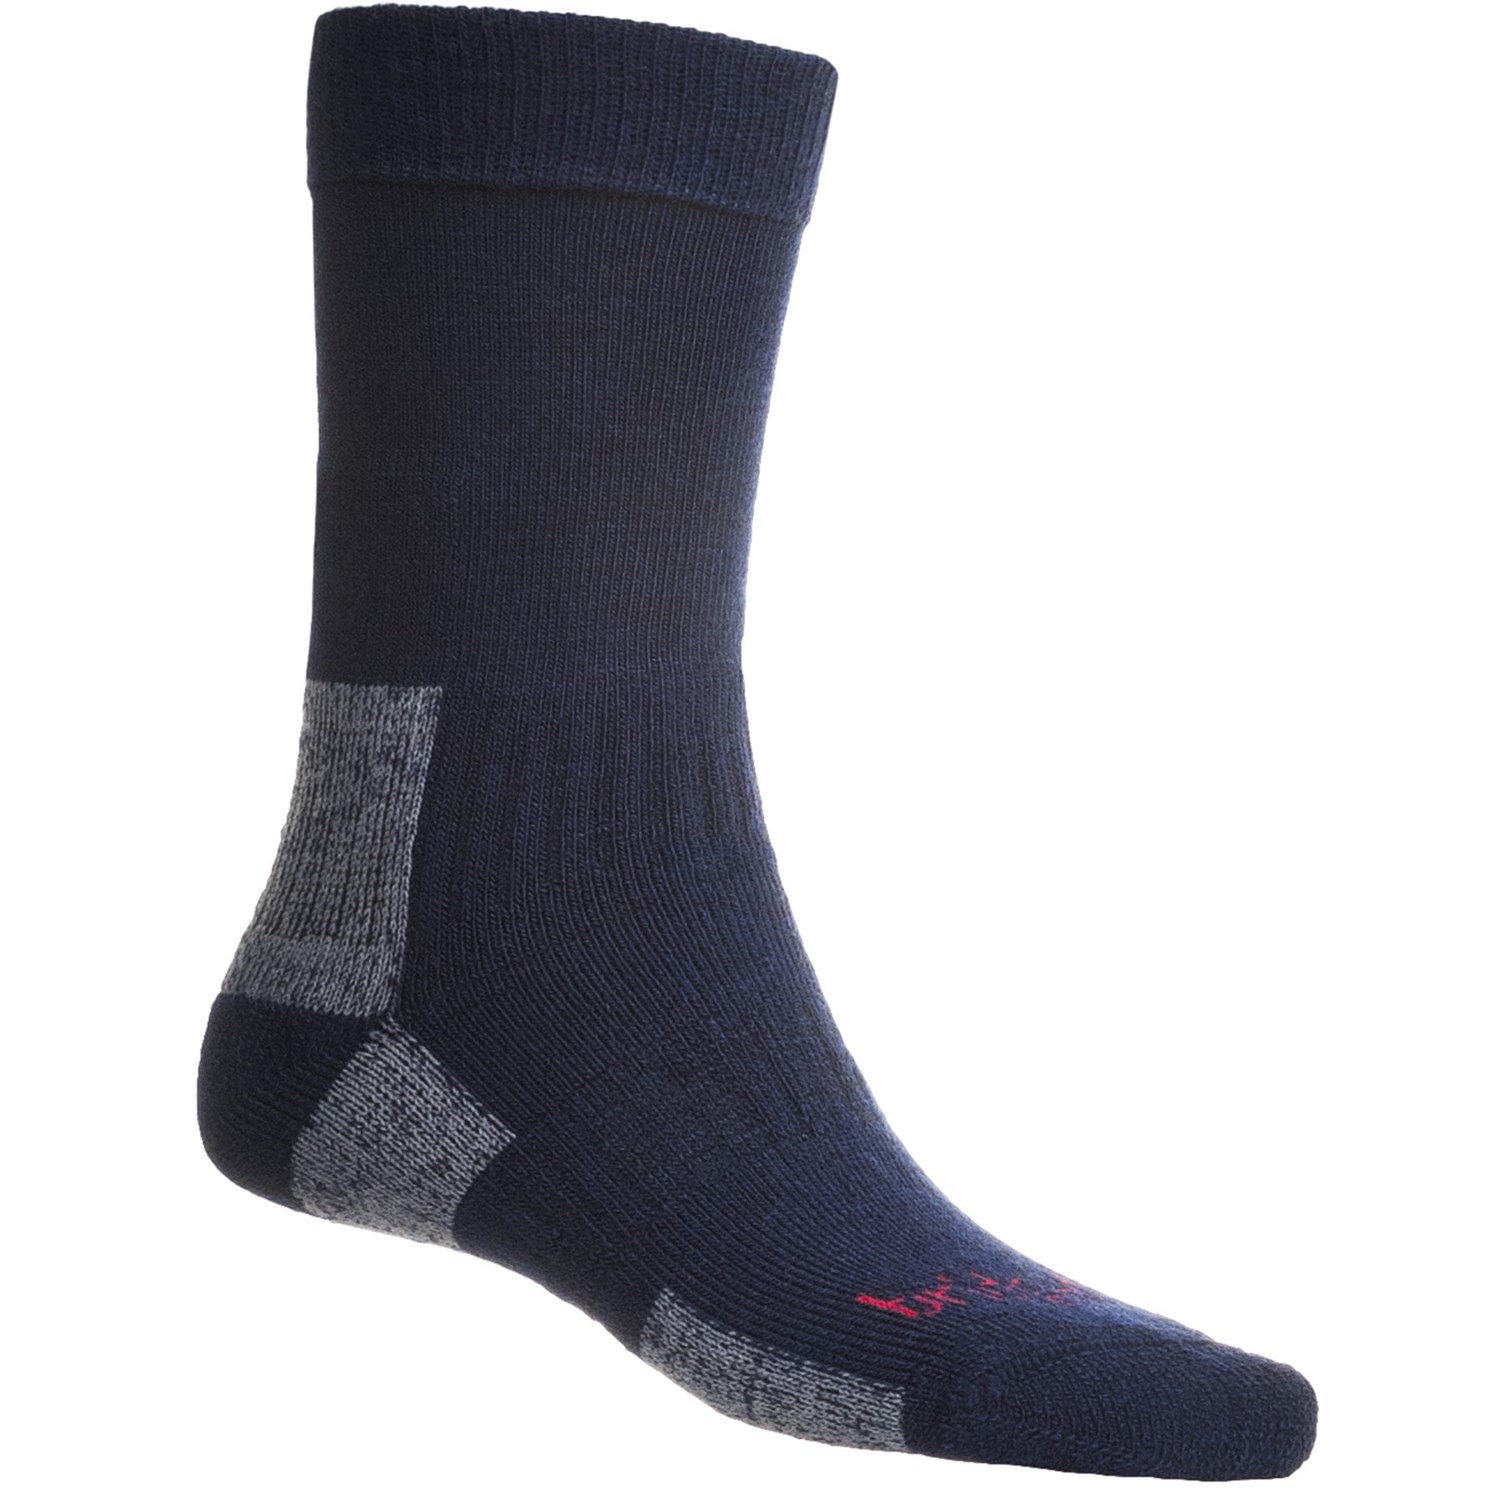  Midweight Hiker Socks  Merino Wool For Men and Women  Save 42%